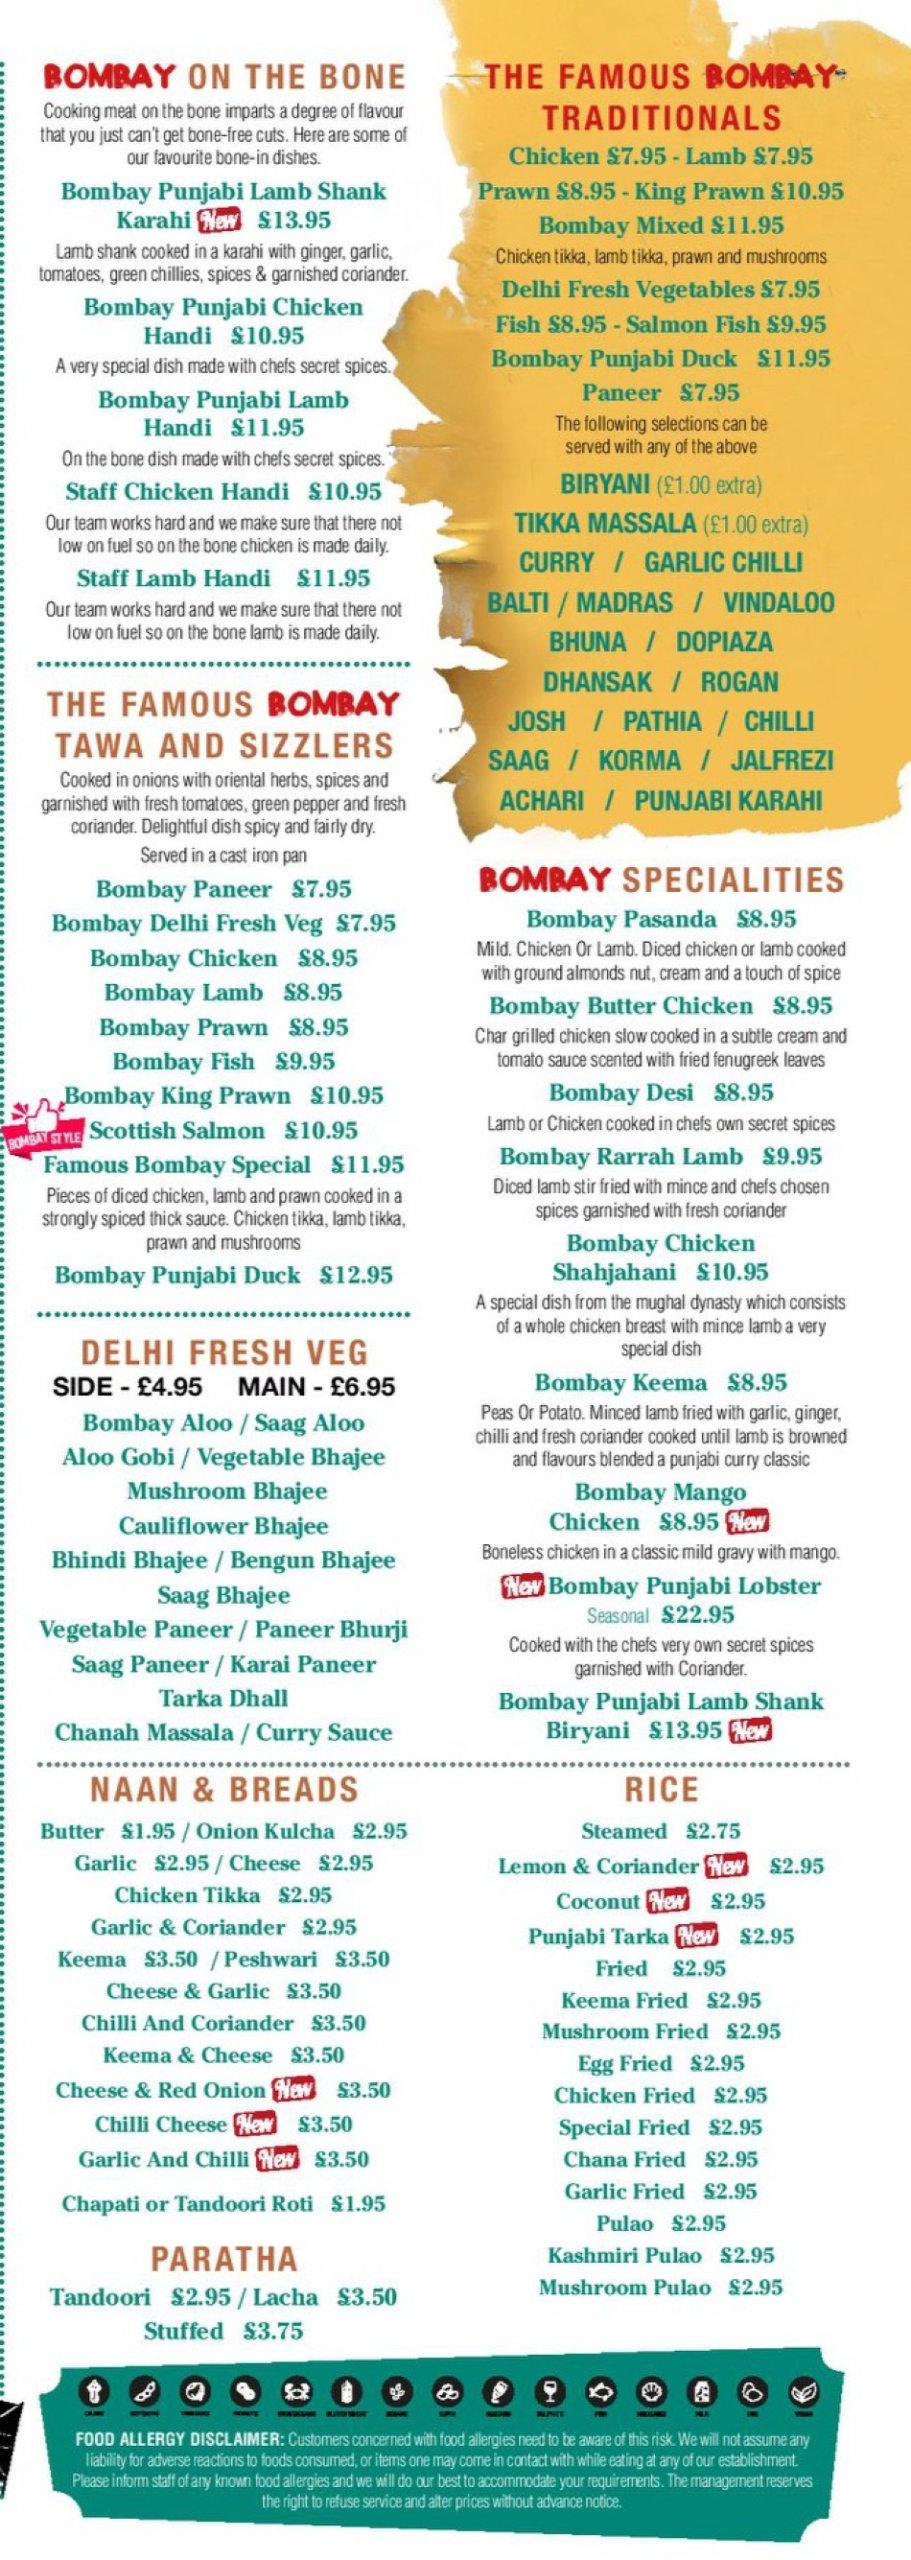 Takeaway Restaurant Menu Page - Bombay Brasserie - Birmingham